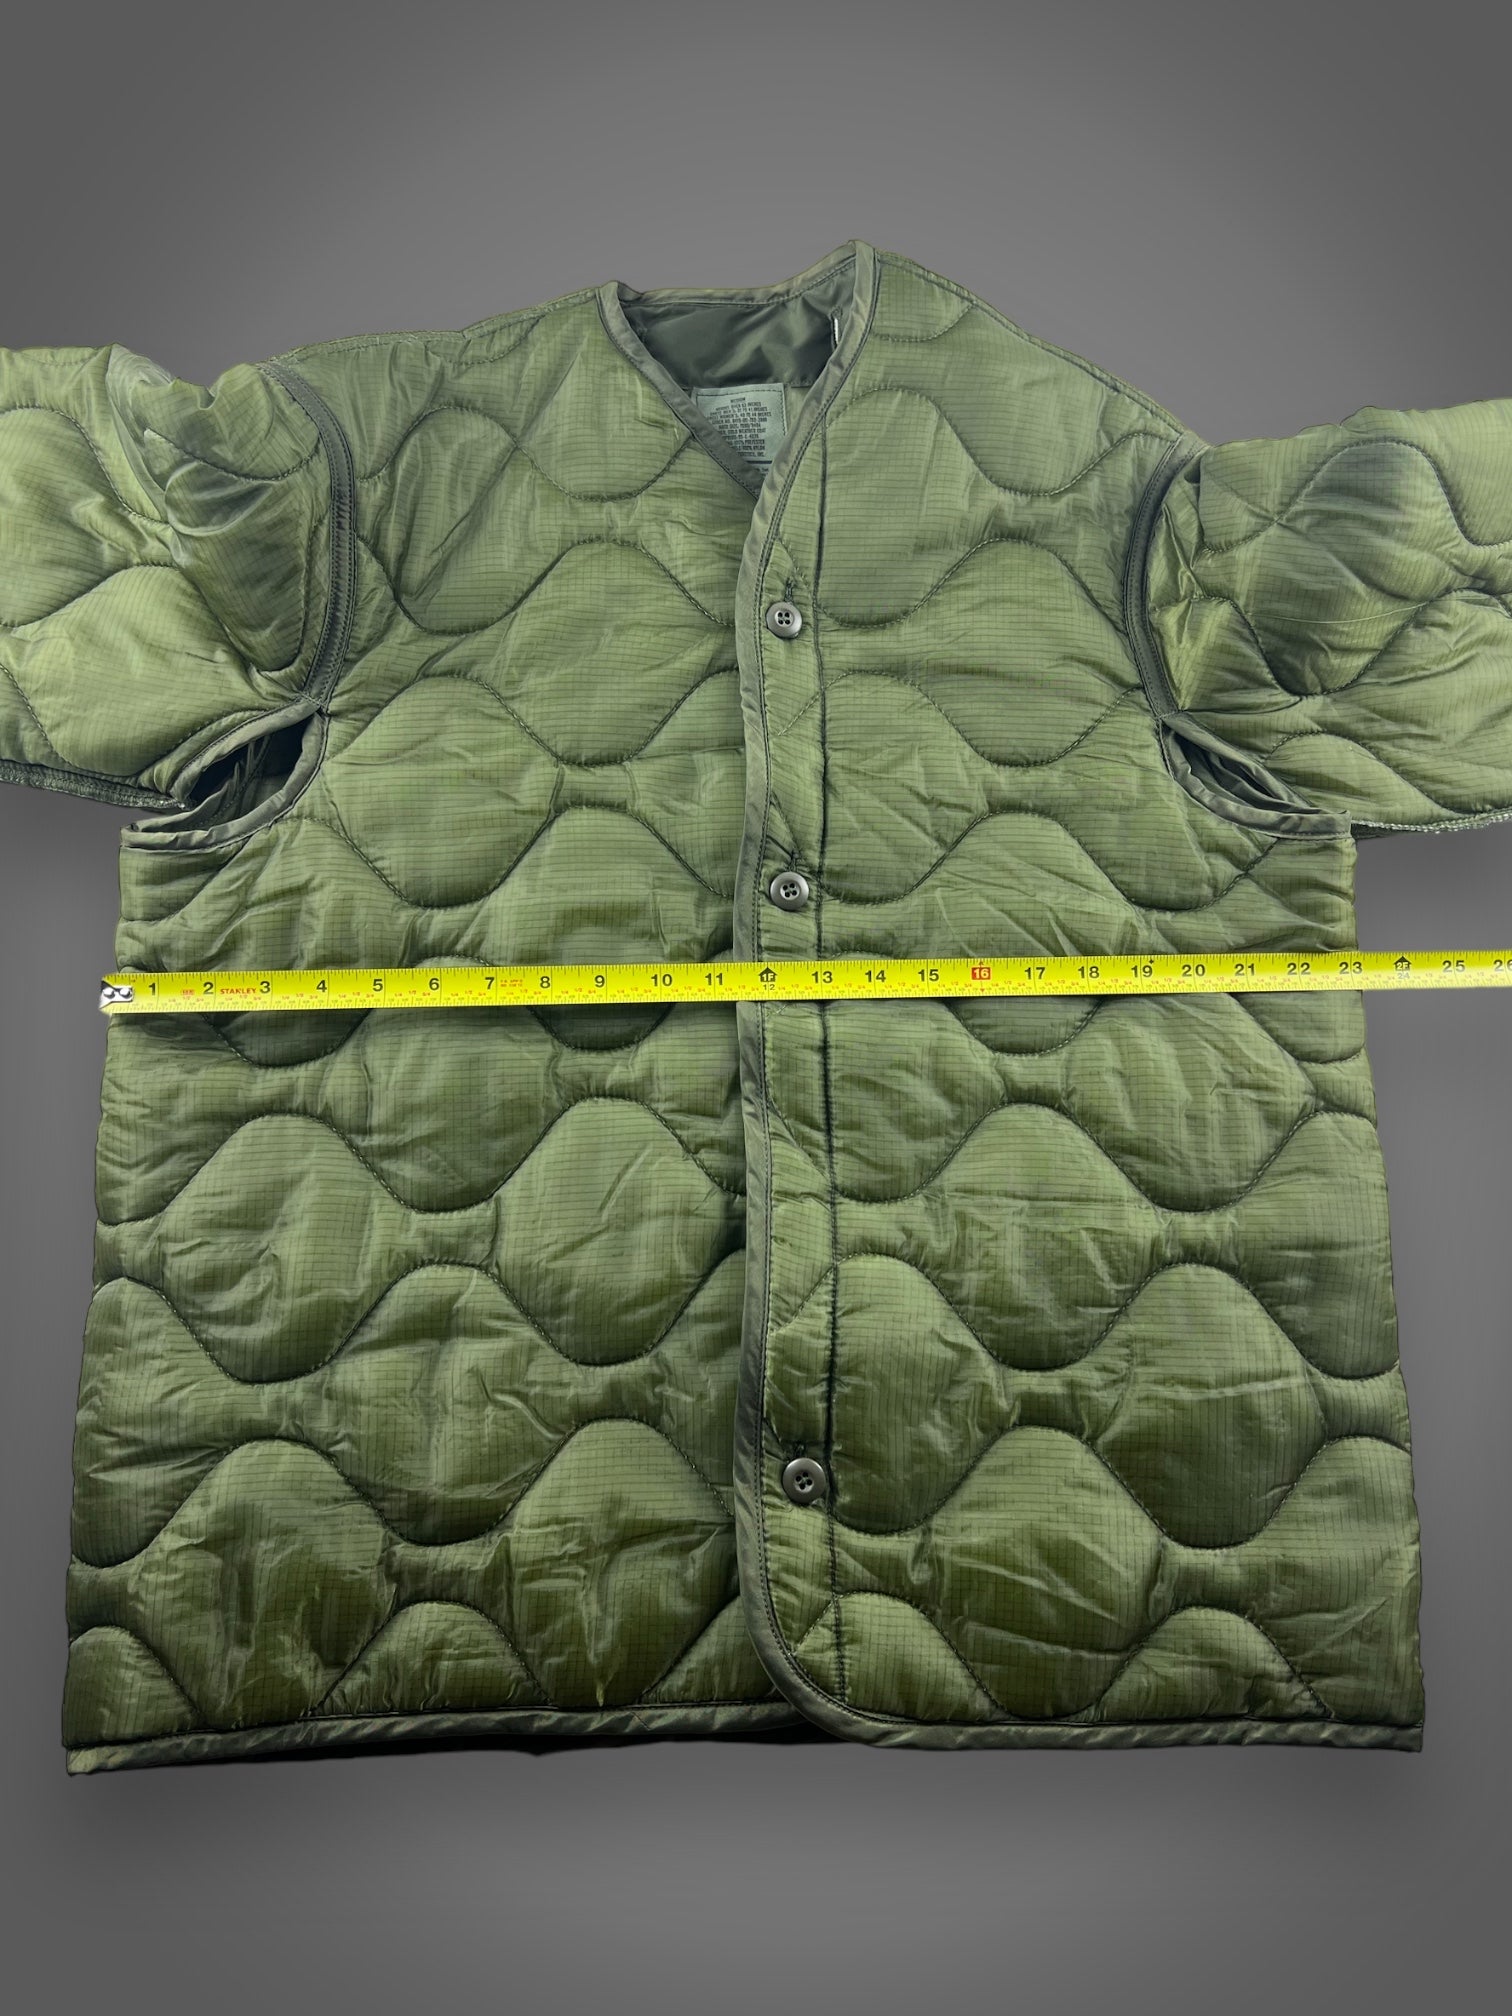 90s military jacket liner fits L